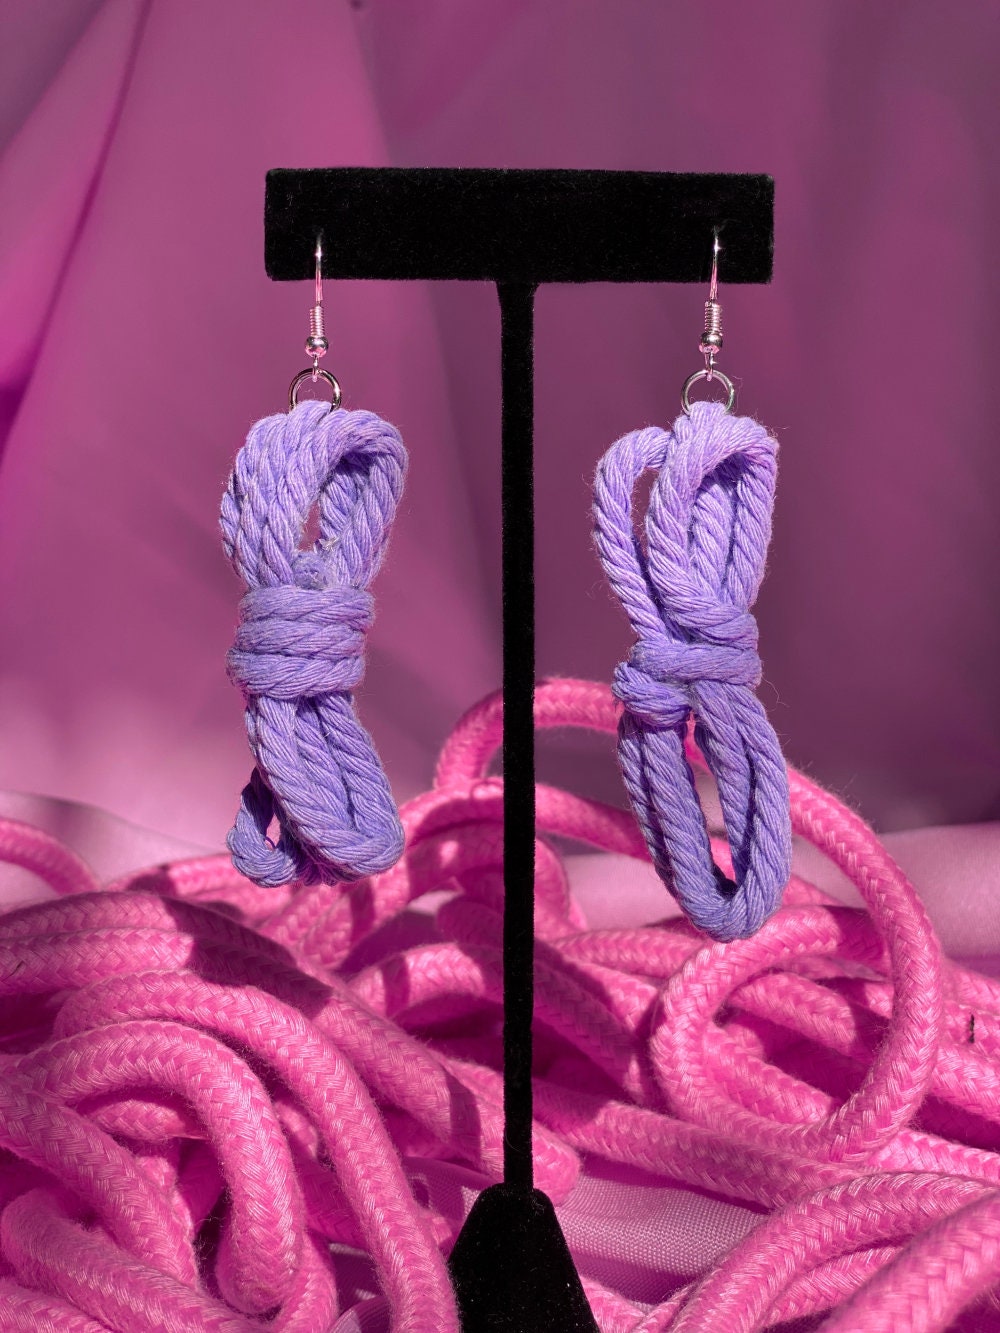 Shibari Rope Bundle Earrings photo